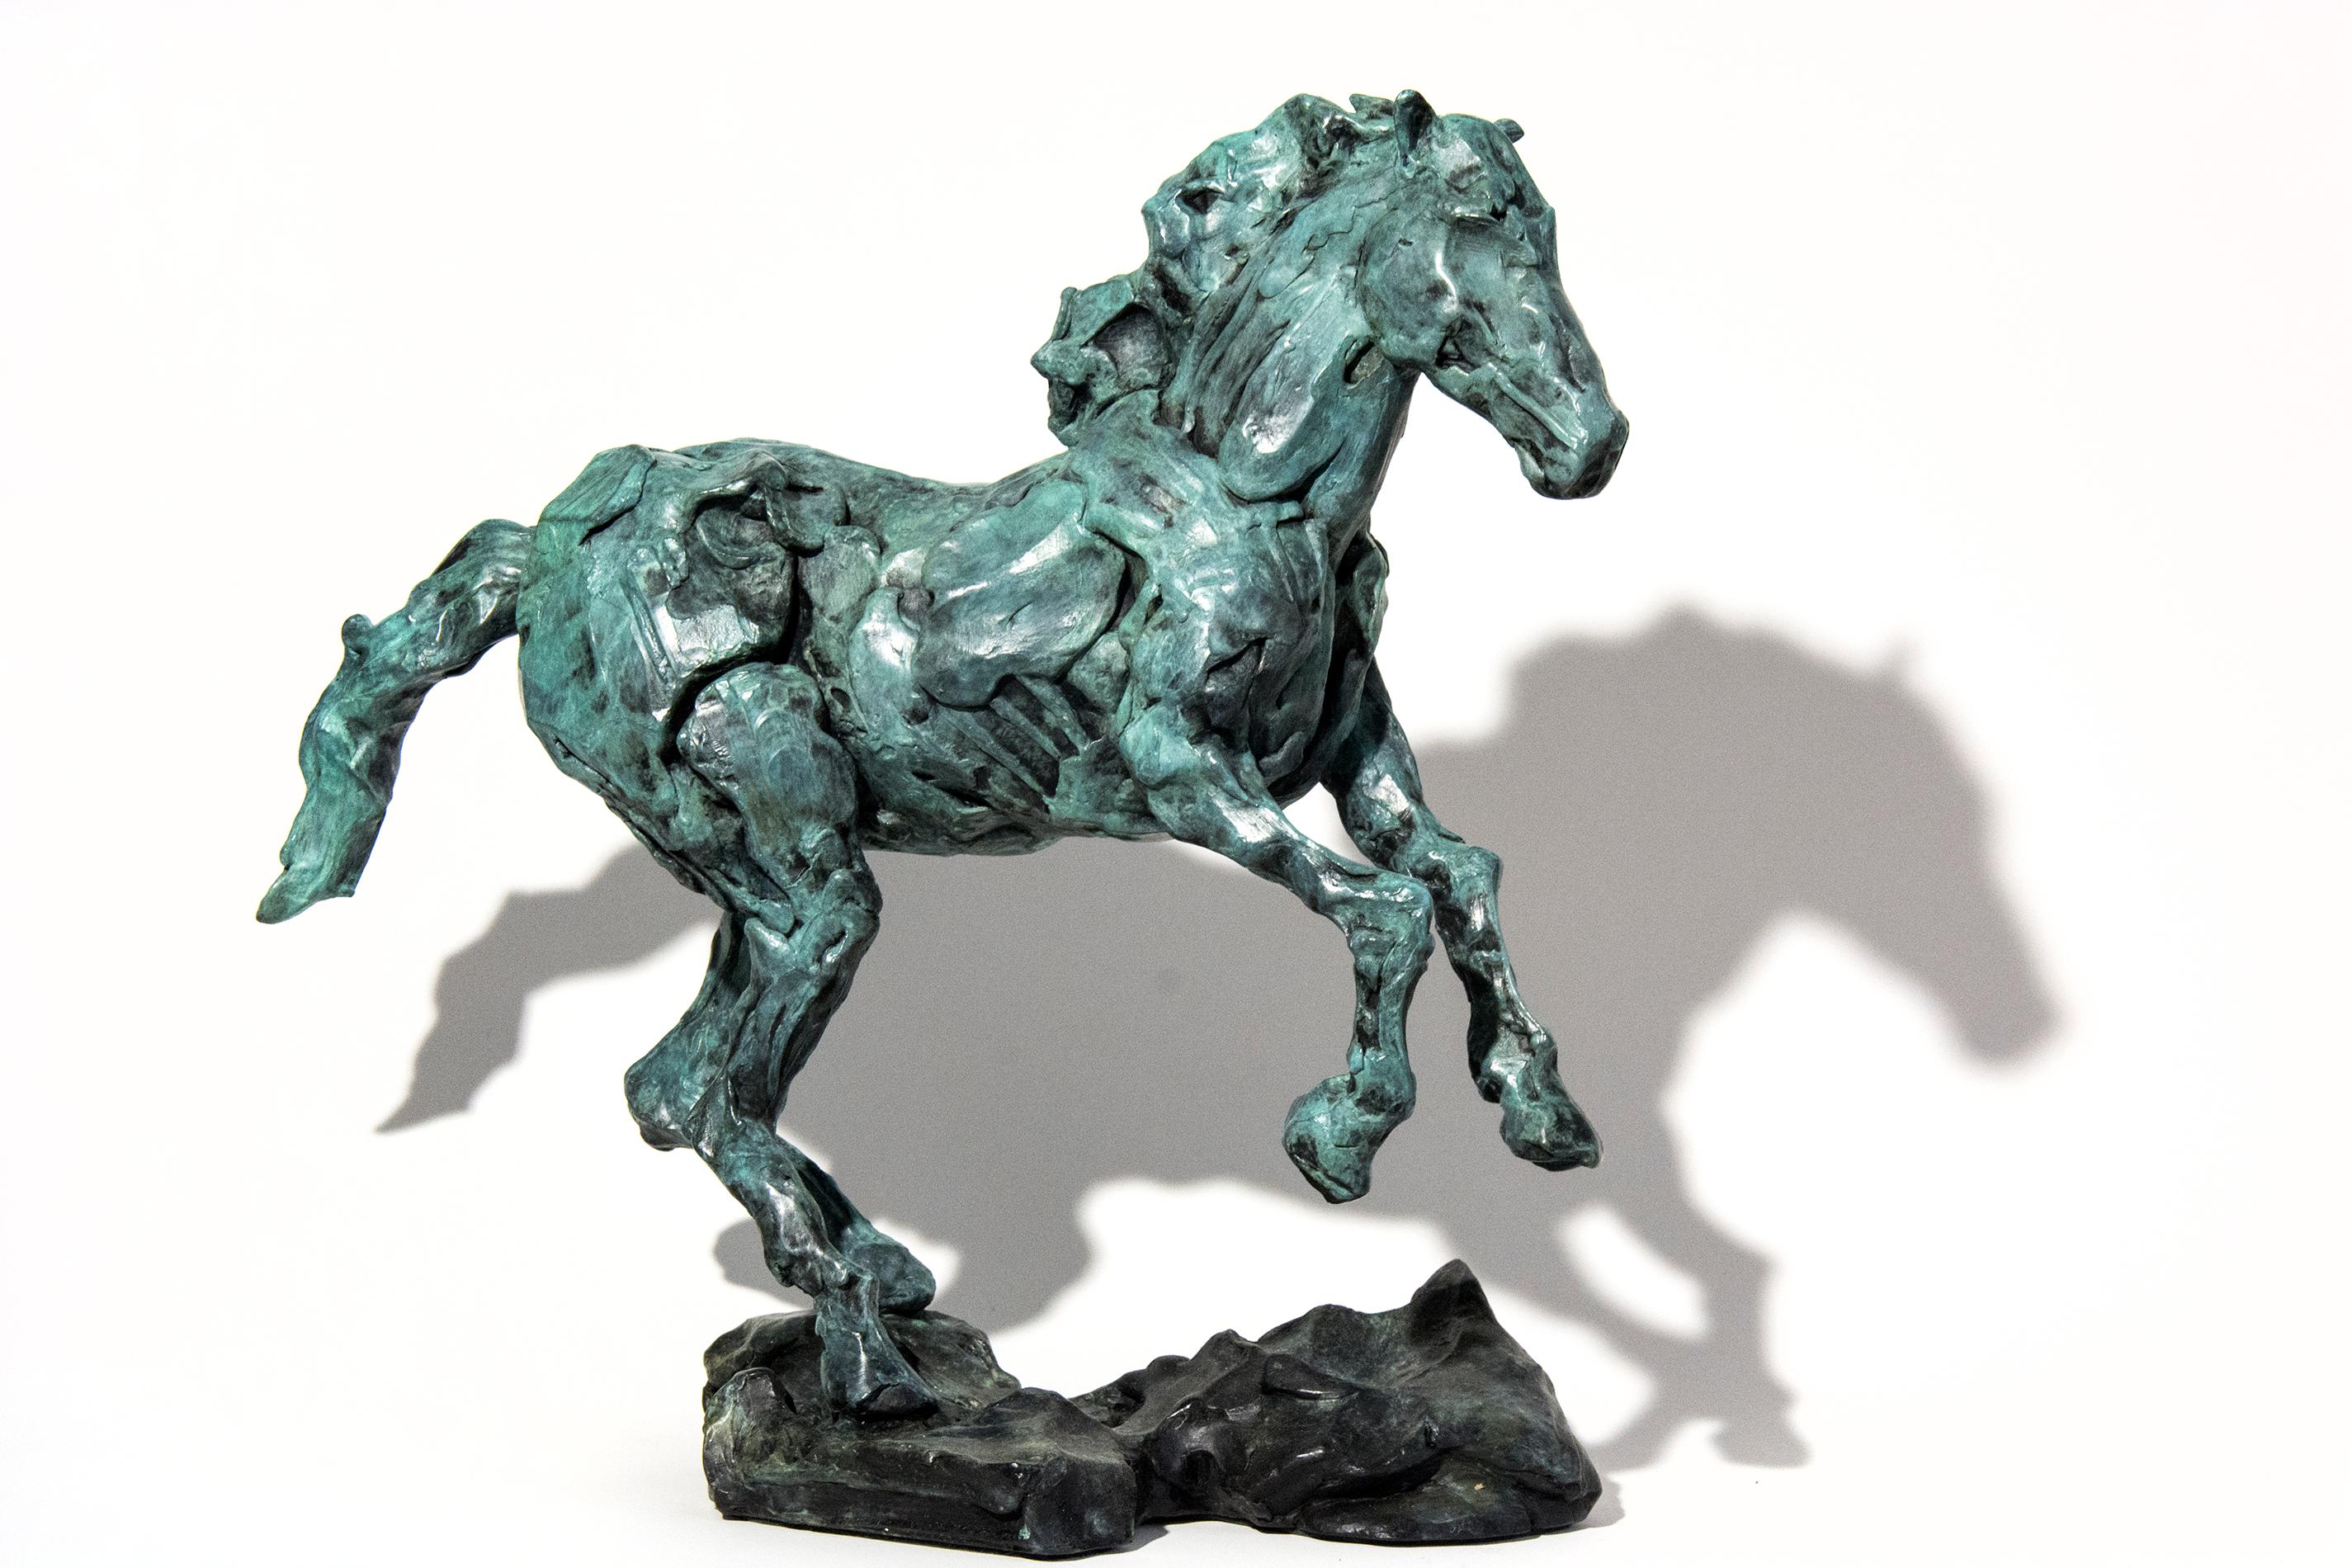 Friesian 3/12 - lively, movement, animal, horse, figurative, bronze statuette - Sculpture by Richard Tosczak